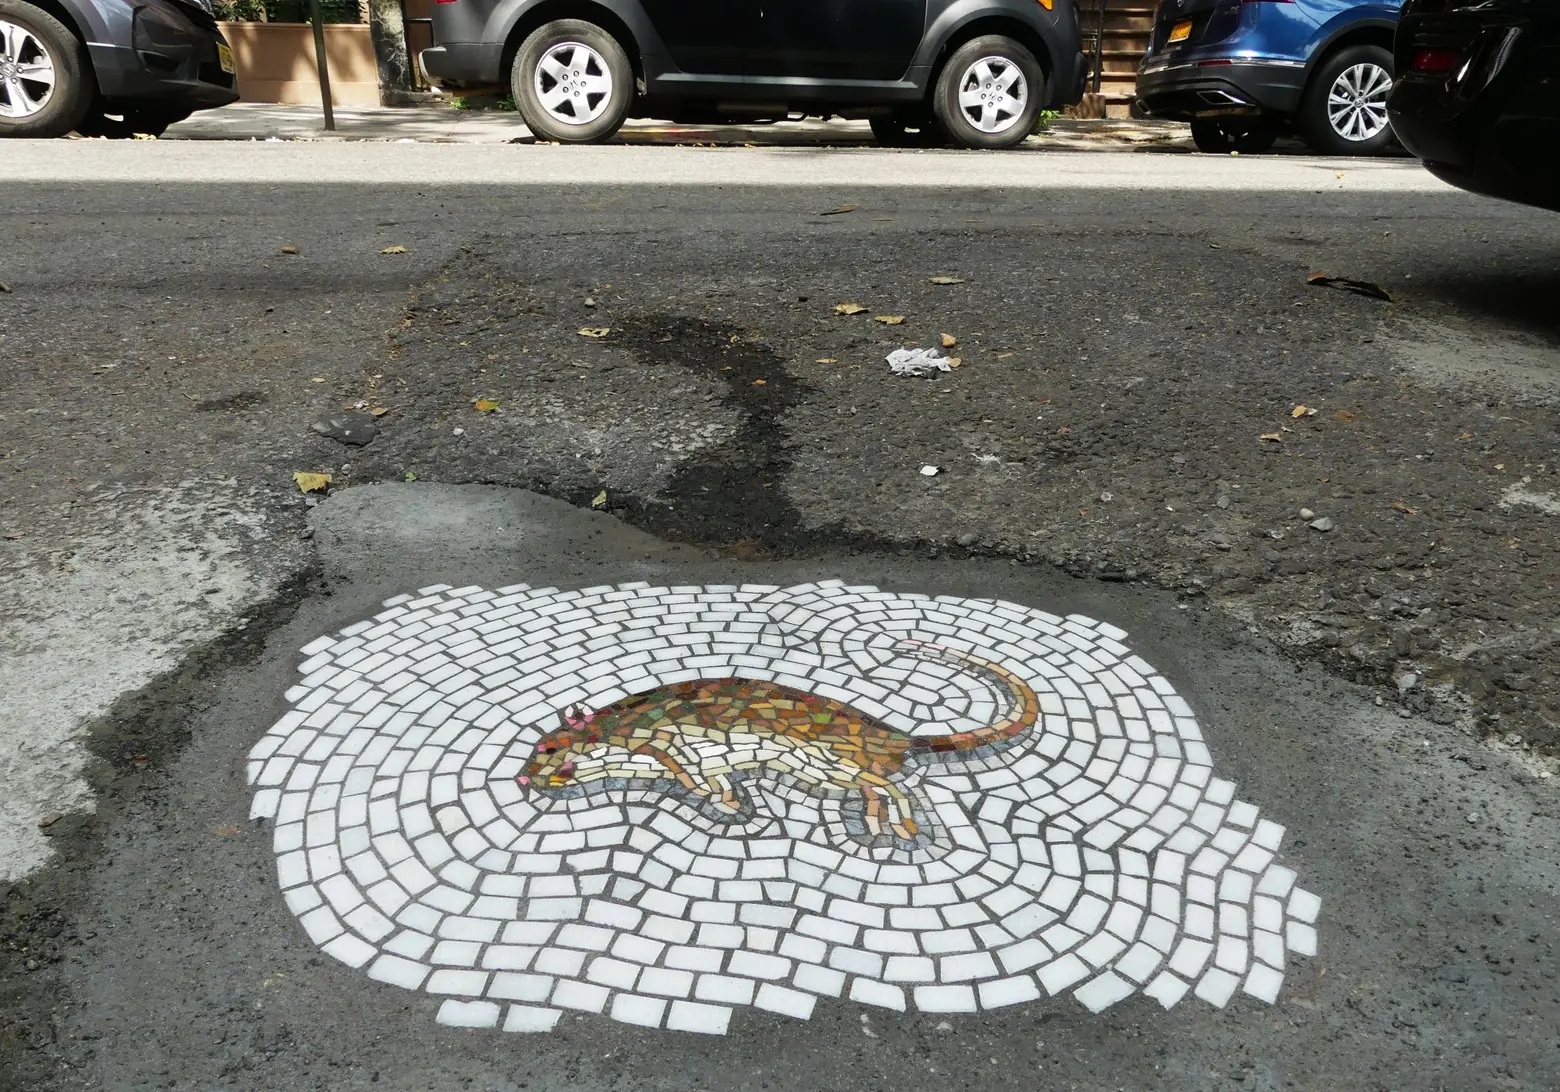 Jim Bachor, pothole mosaic, NYC potholes, Vermin of New York